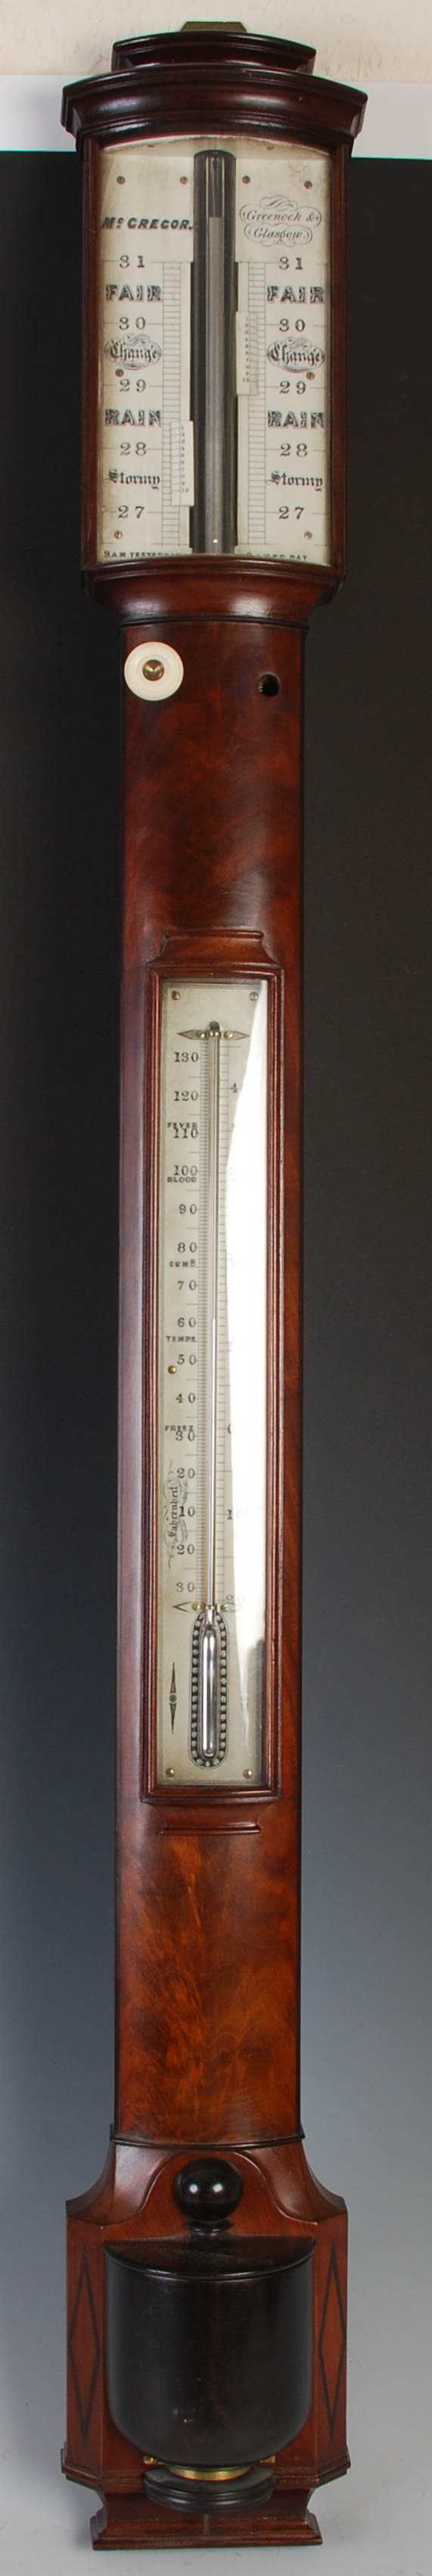 A 19th century mahogany and ebony lined stick barometer, MCGREGOR, GREENOCK & GLASGOW, with